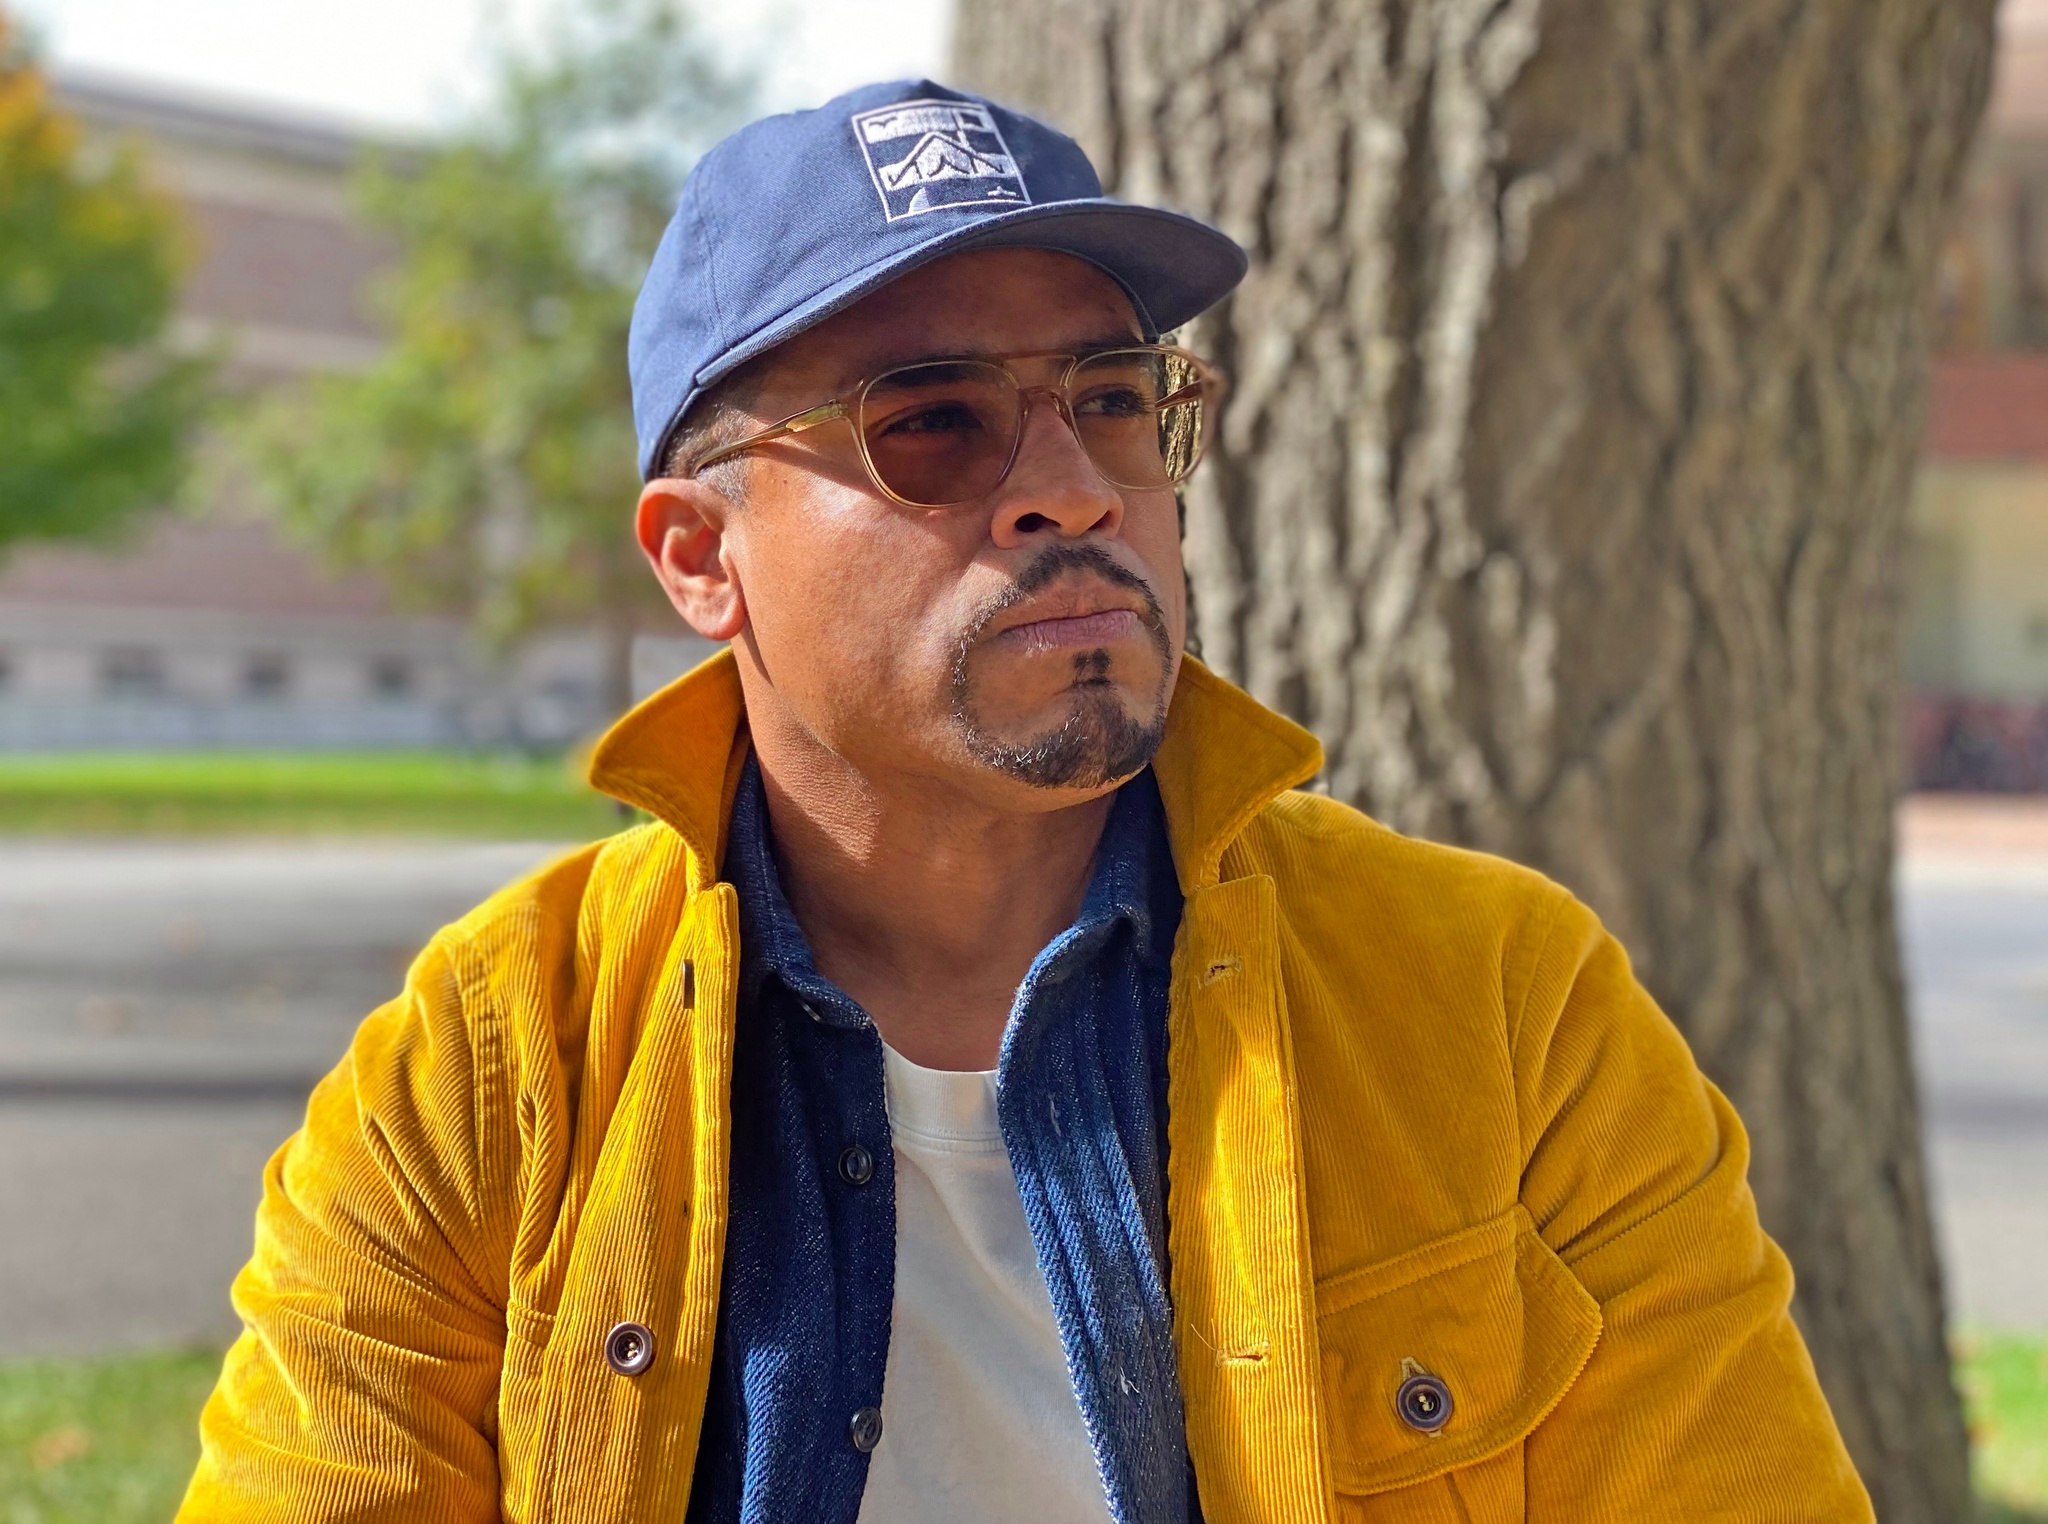 A portrait of Shaun Leonardo outside posing against a tree. He wears a blue basseball cap, sunglasses, and a yellow jacket. He looks off to the side.